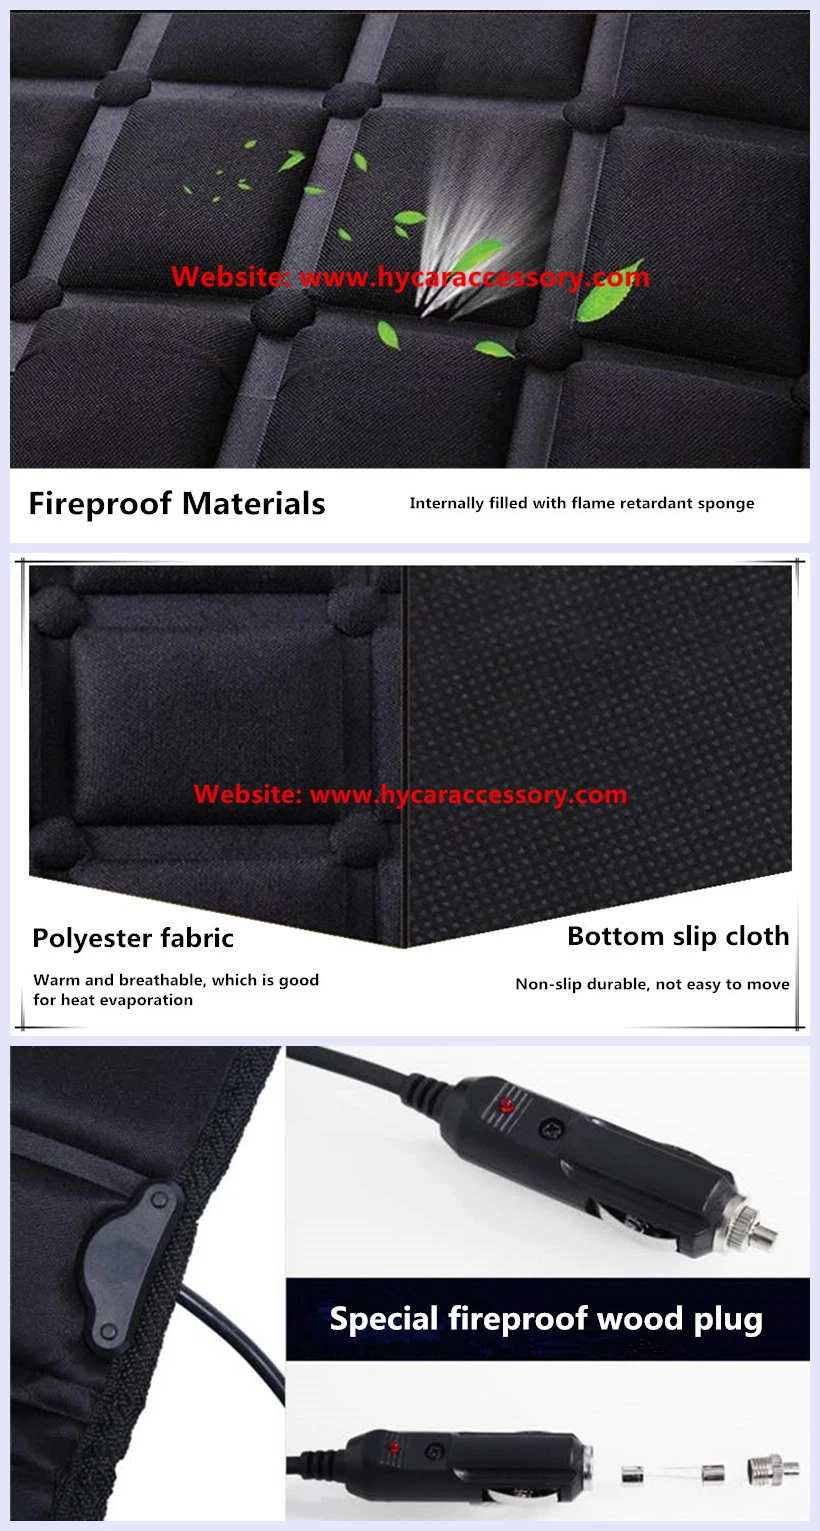 Wholesale 12V Black Warmer Auto Universal Car Seat Heating Mat